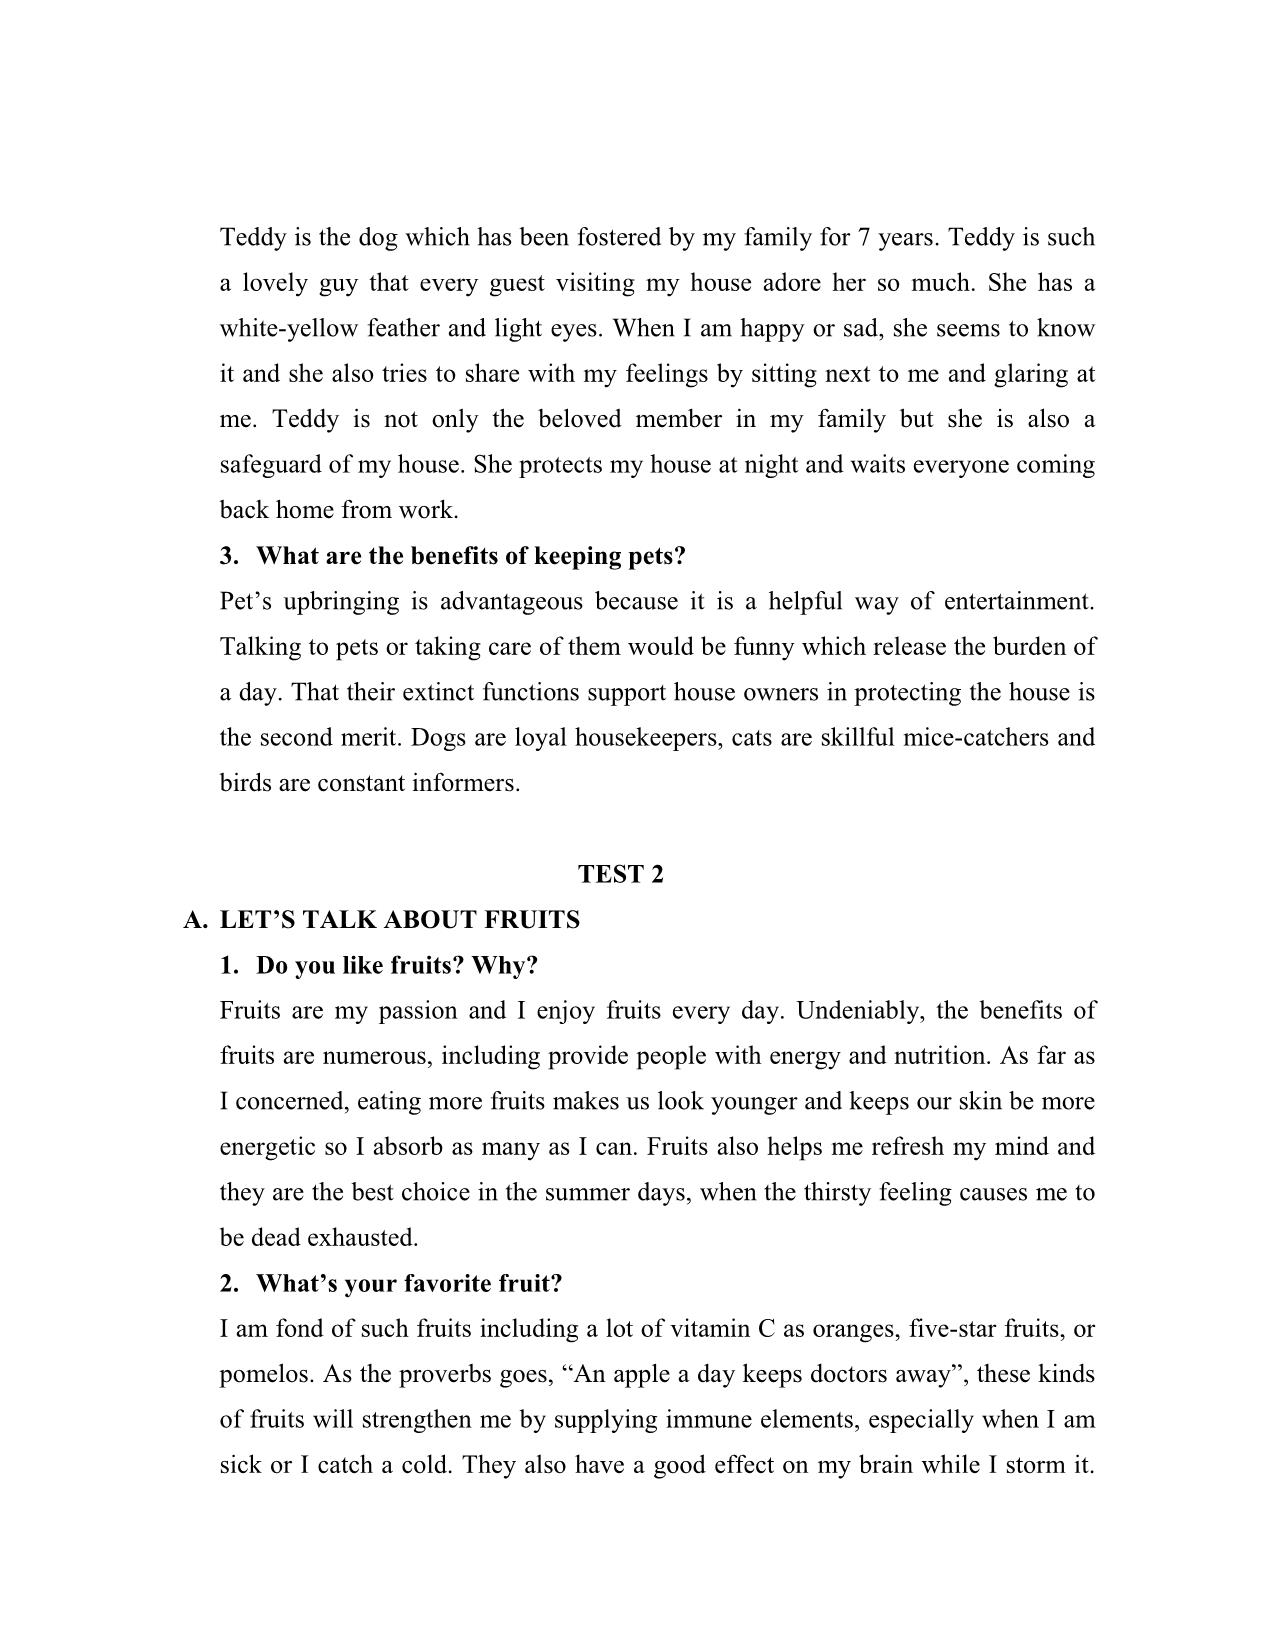 Tiếng Anh - Vstep speaking part 1 trang 2